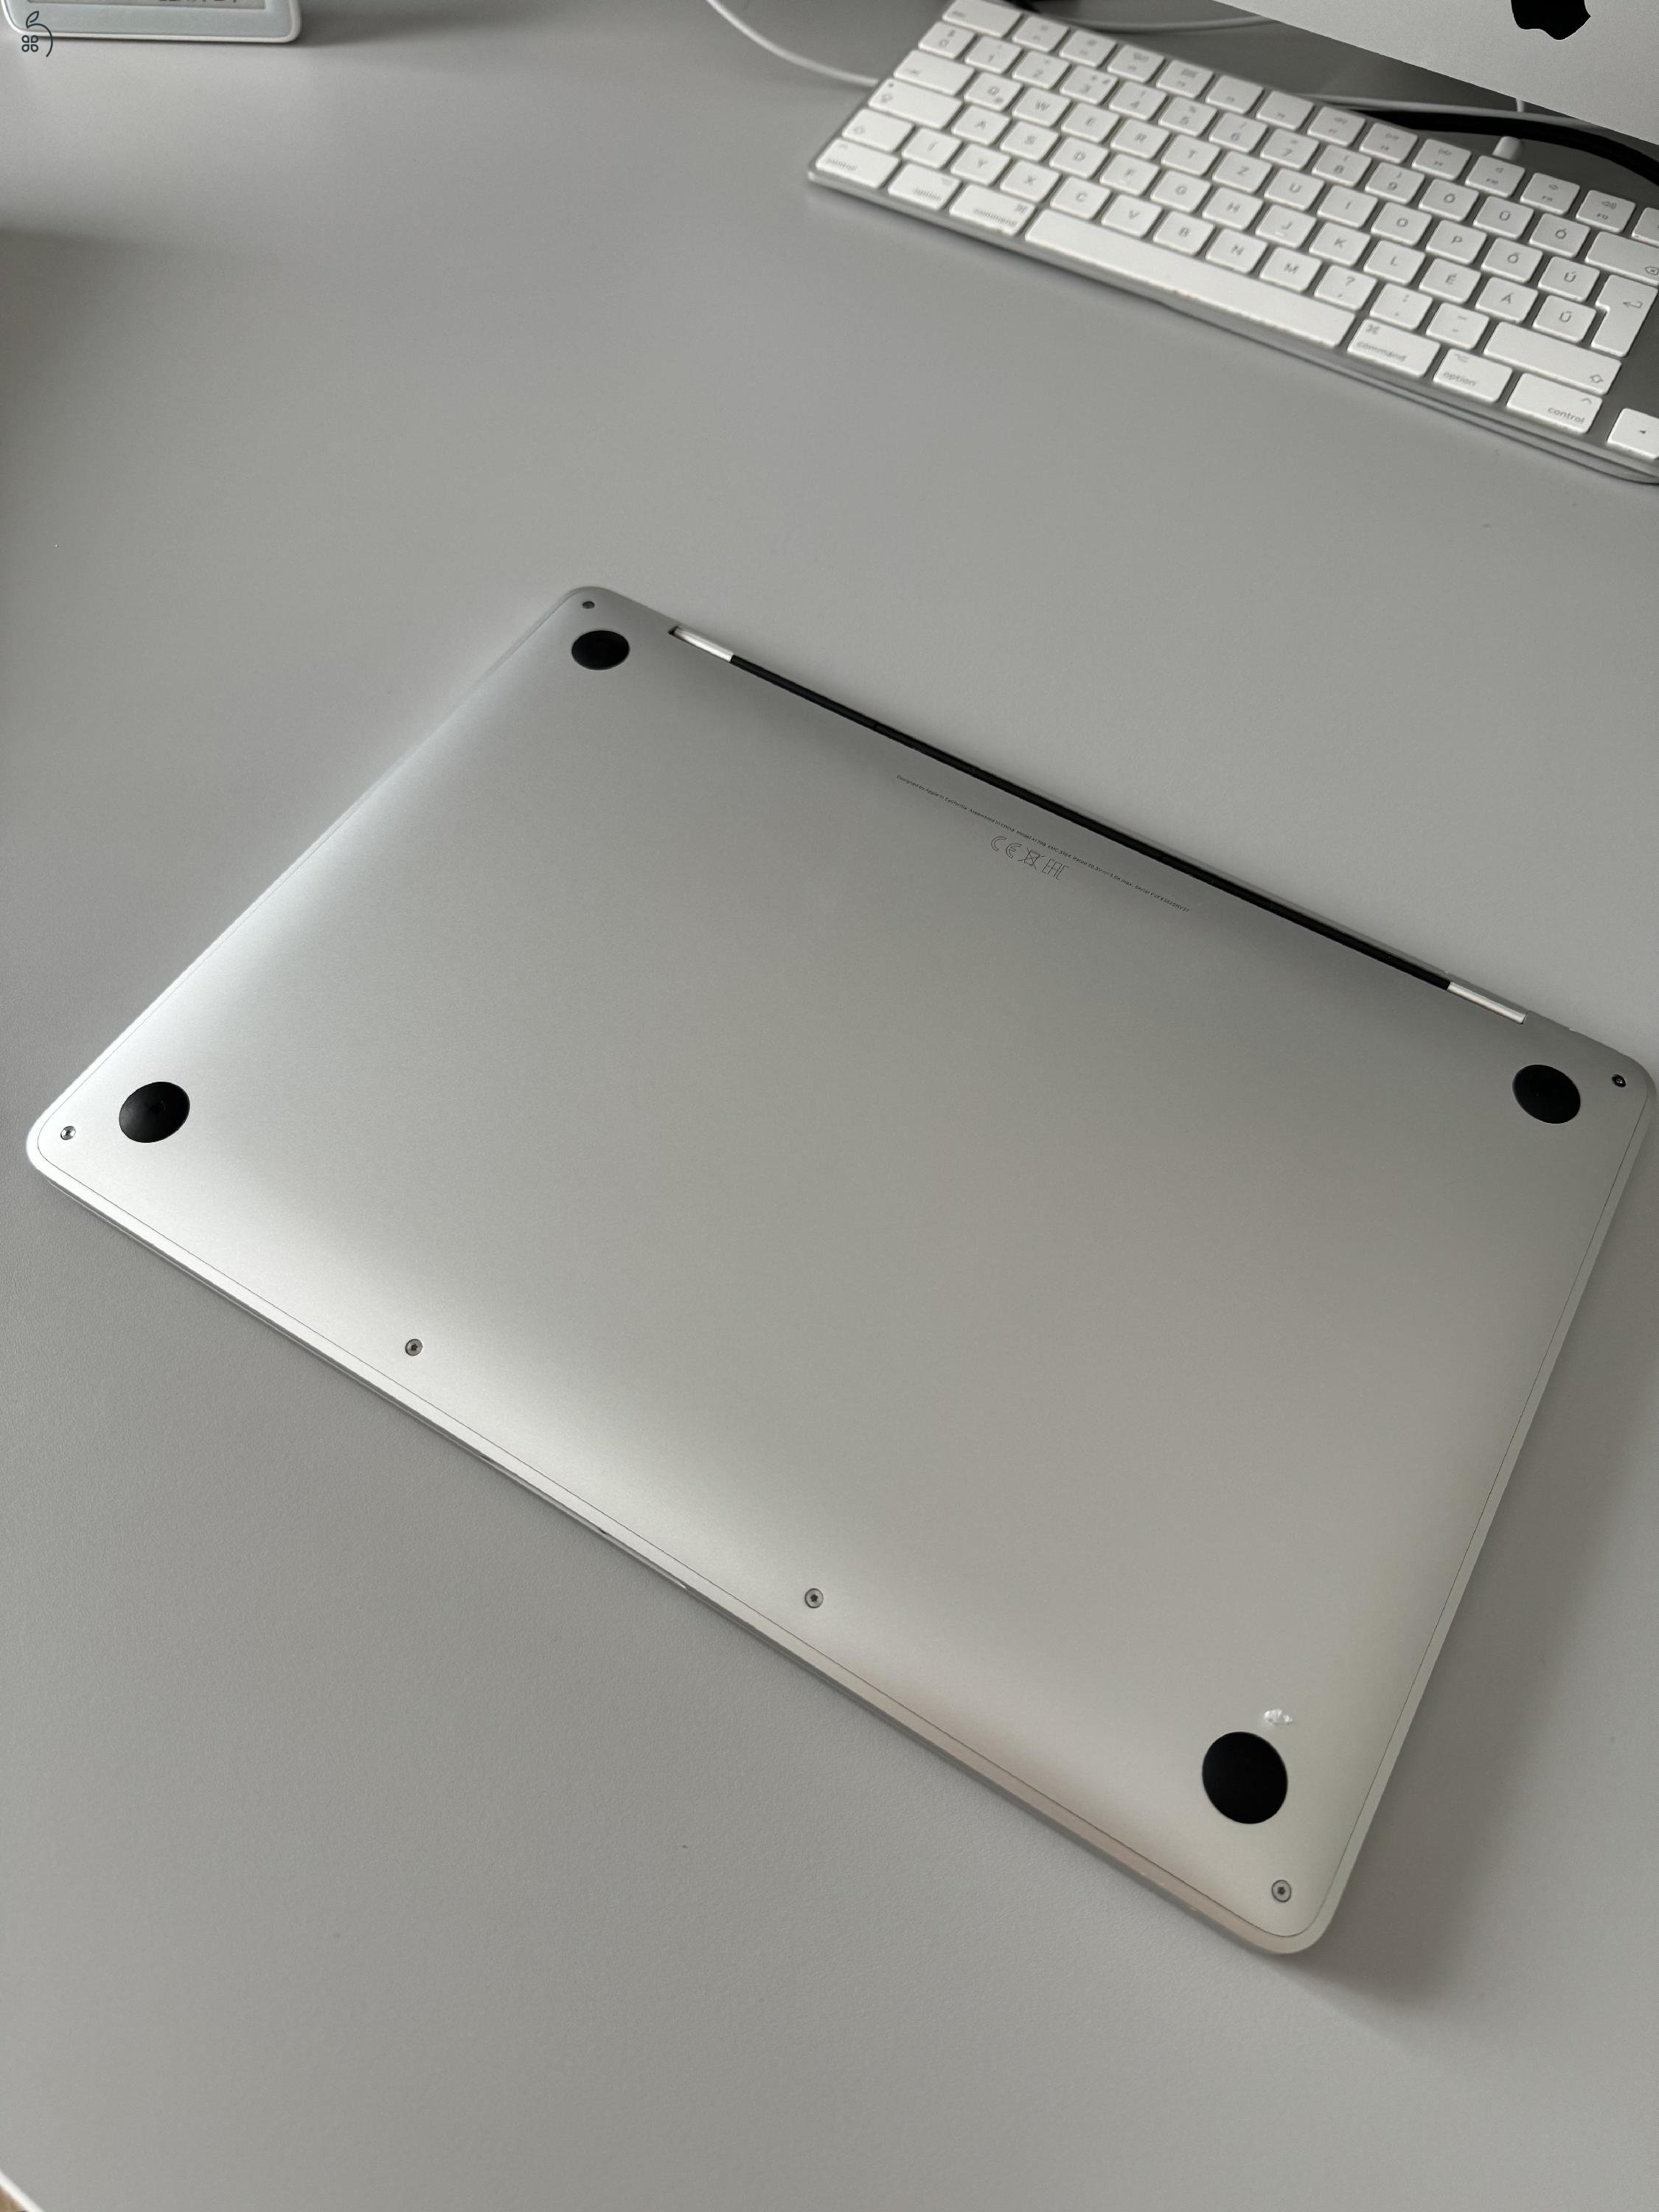 Macbook Pro 2017, 13 inch, i5, 256 gb